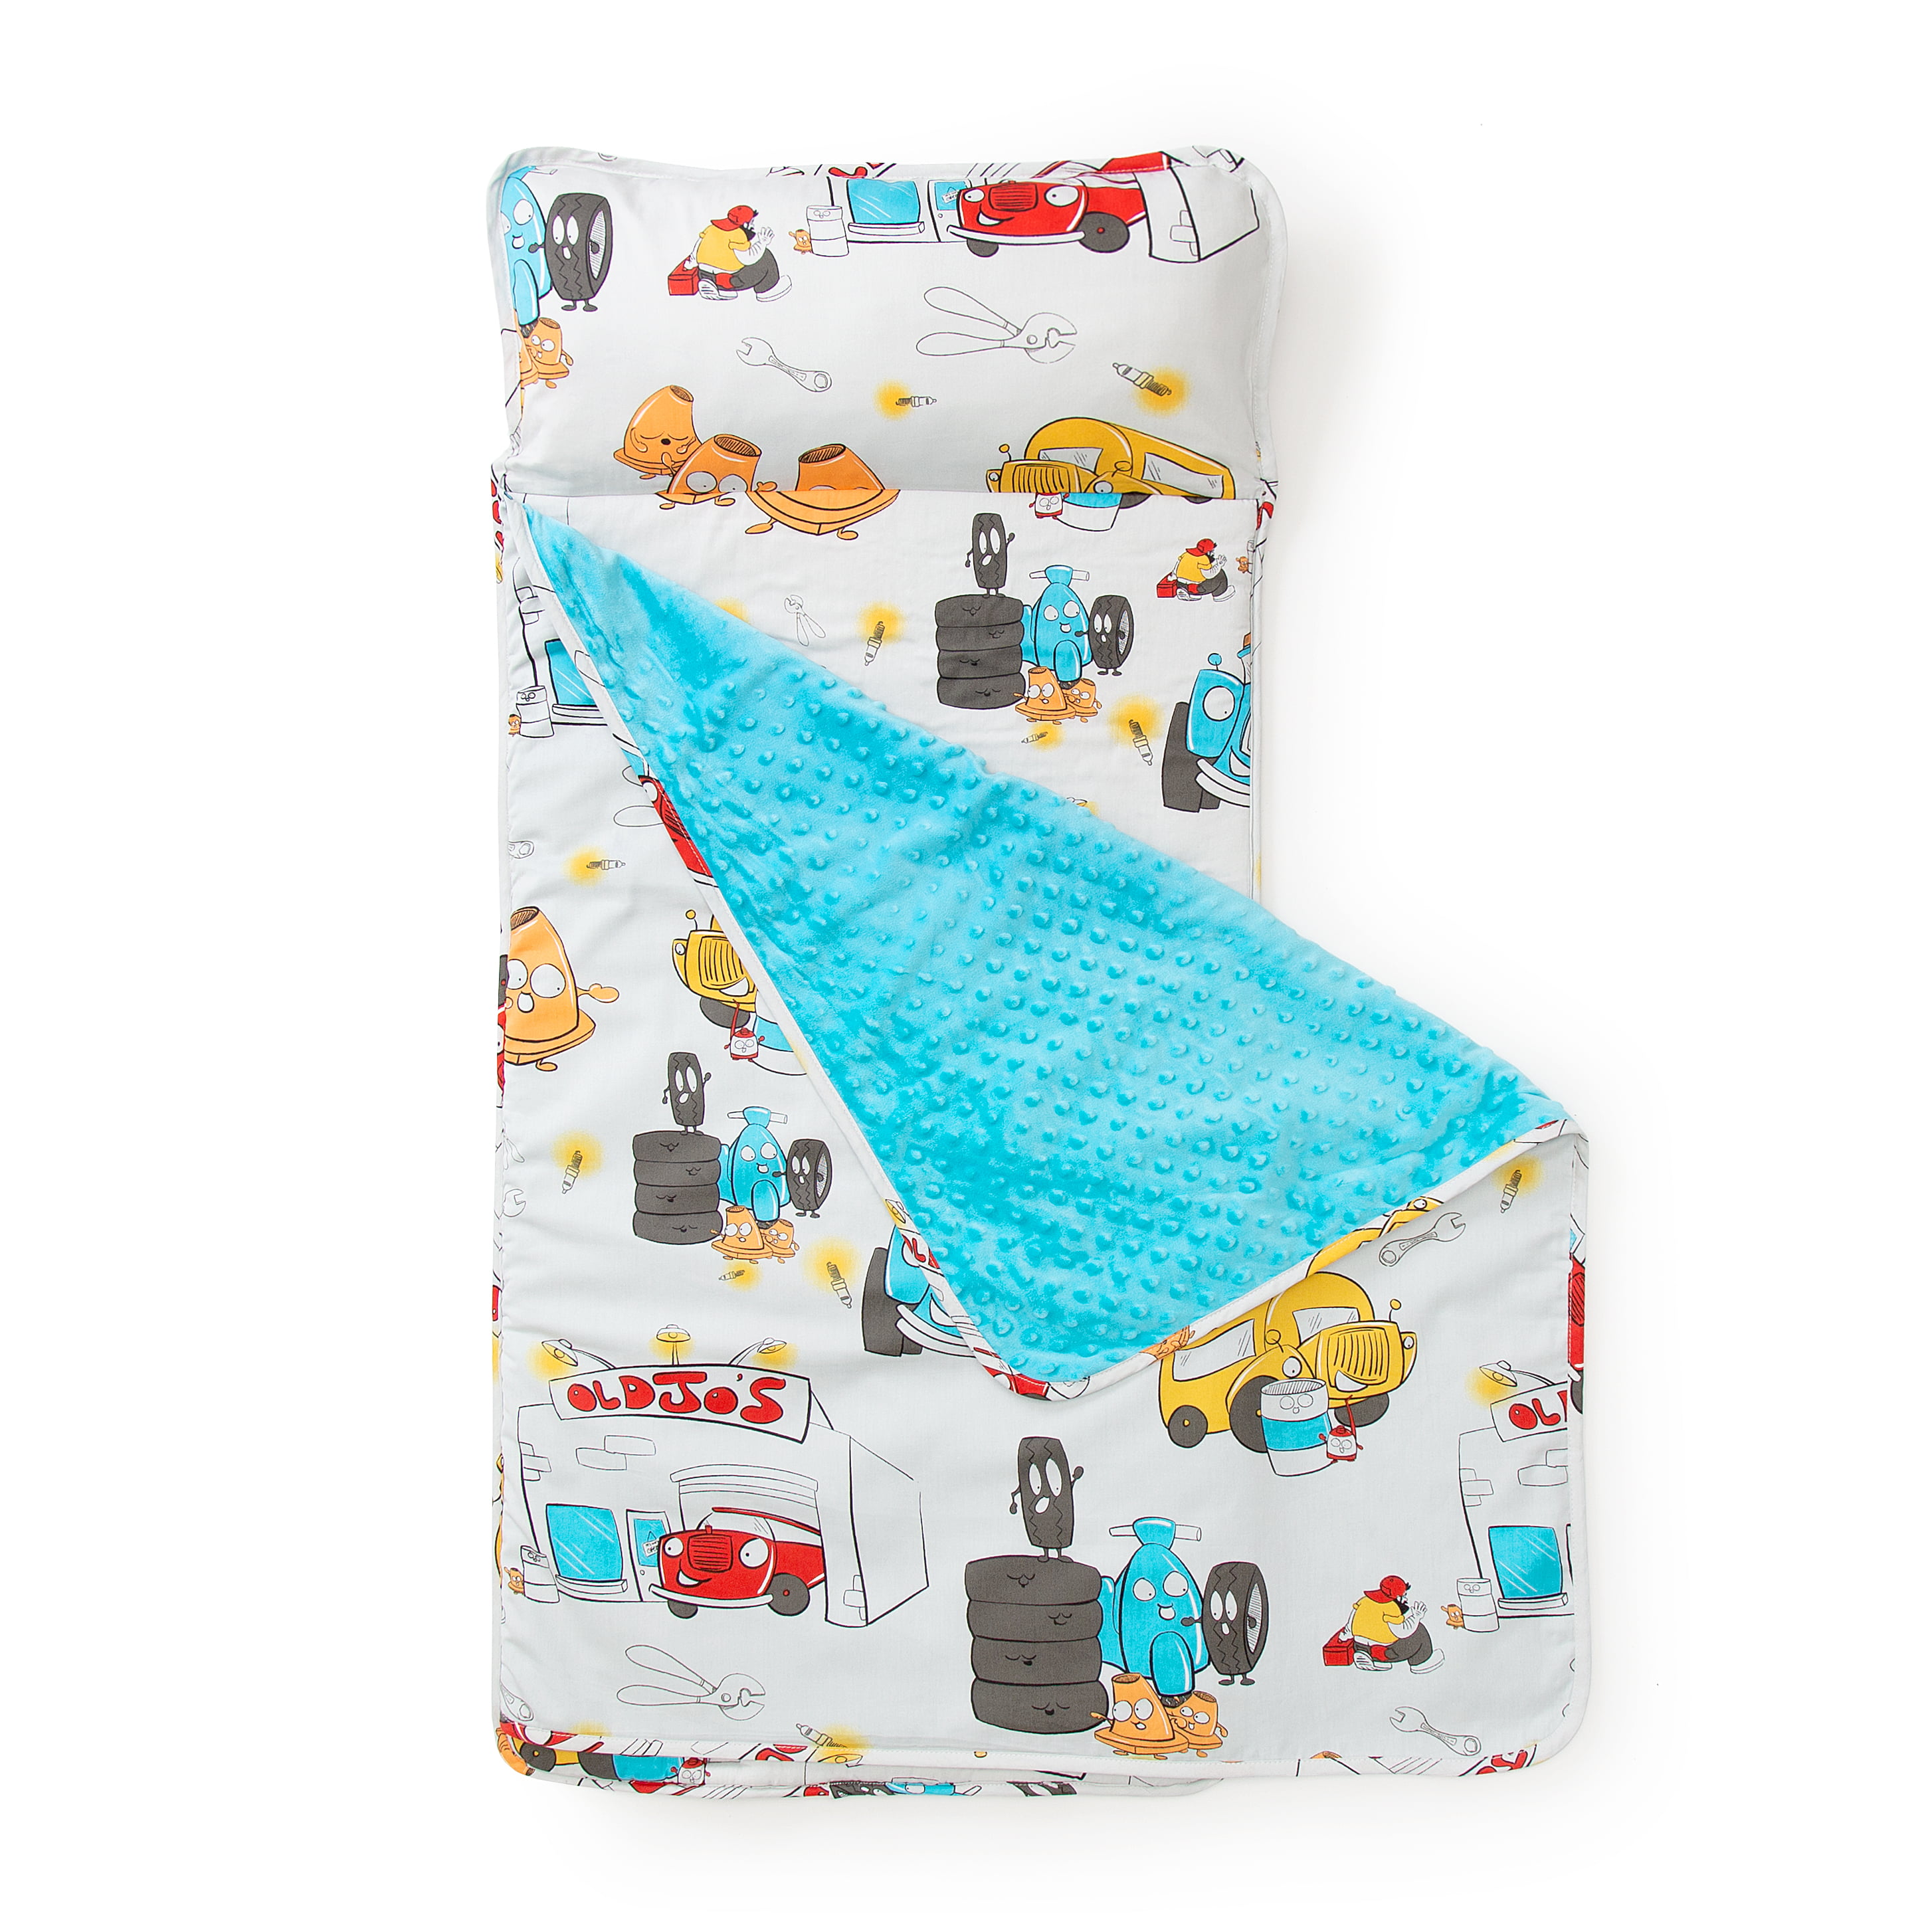 Set of 15, Blue/Pink Nursery Sleep MAT ♥ Waterproof • Triple Folding Rest Mats • Toddler Sleeping Mattress • Baby Nap Time • No 1 Choice for Childminder and Daycare